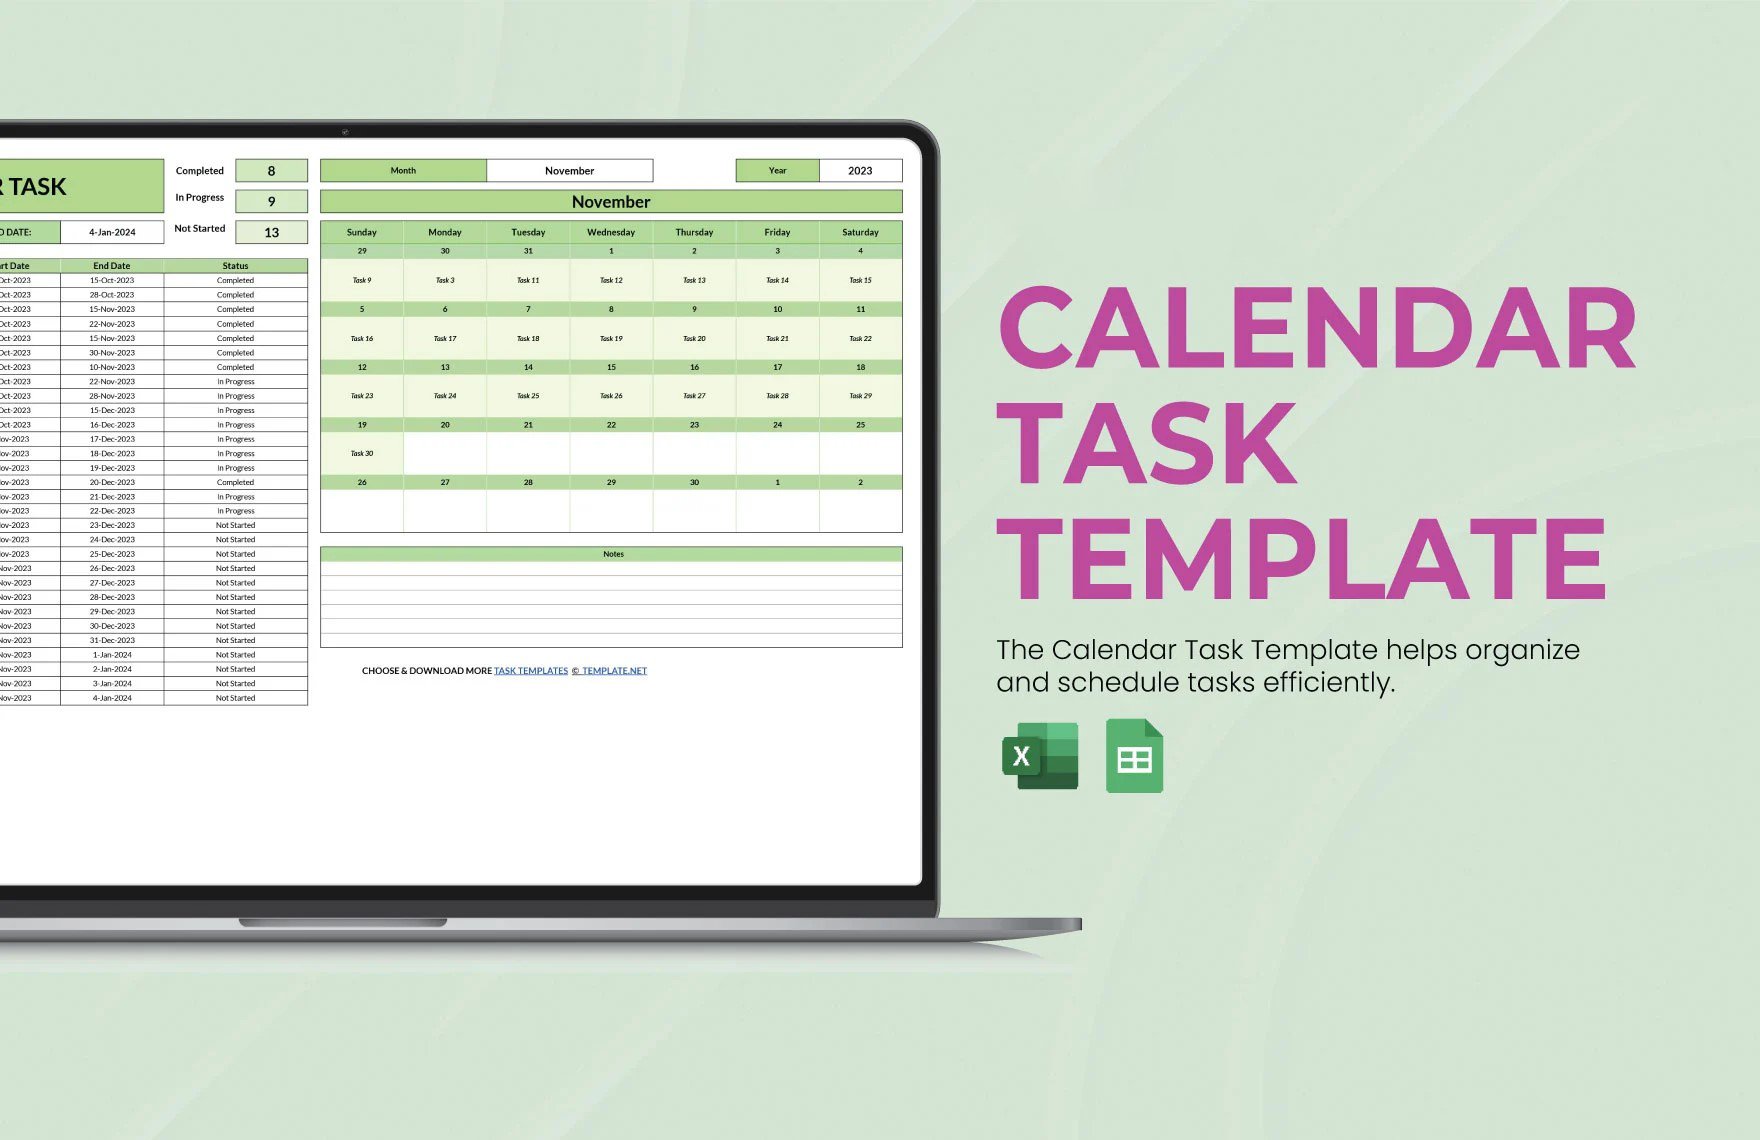 Calendar Task Template